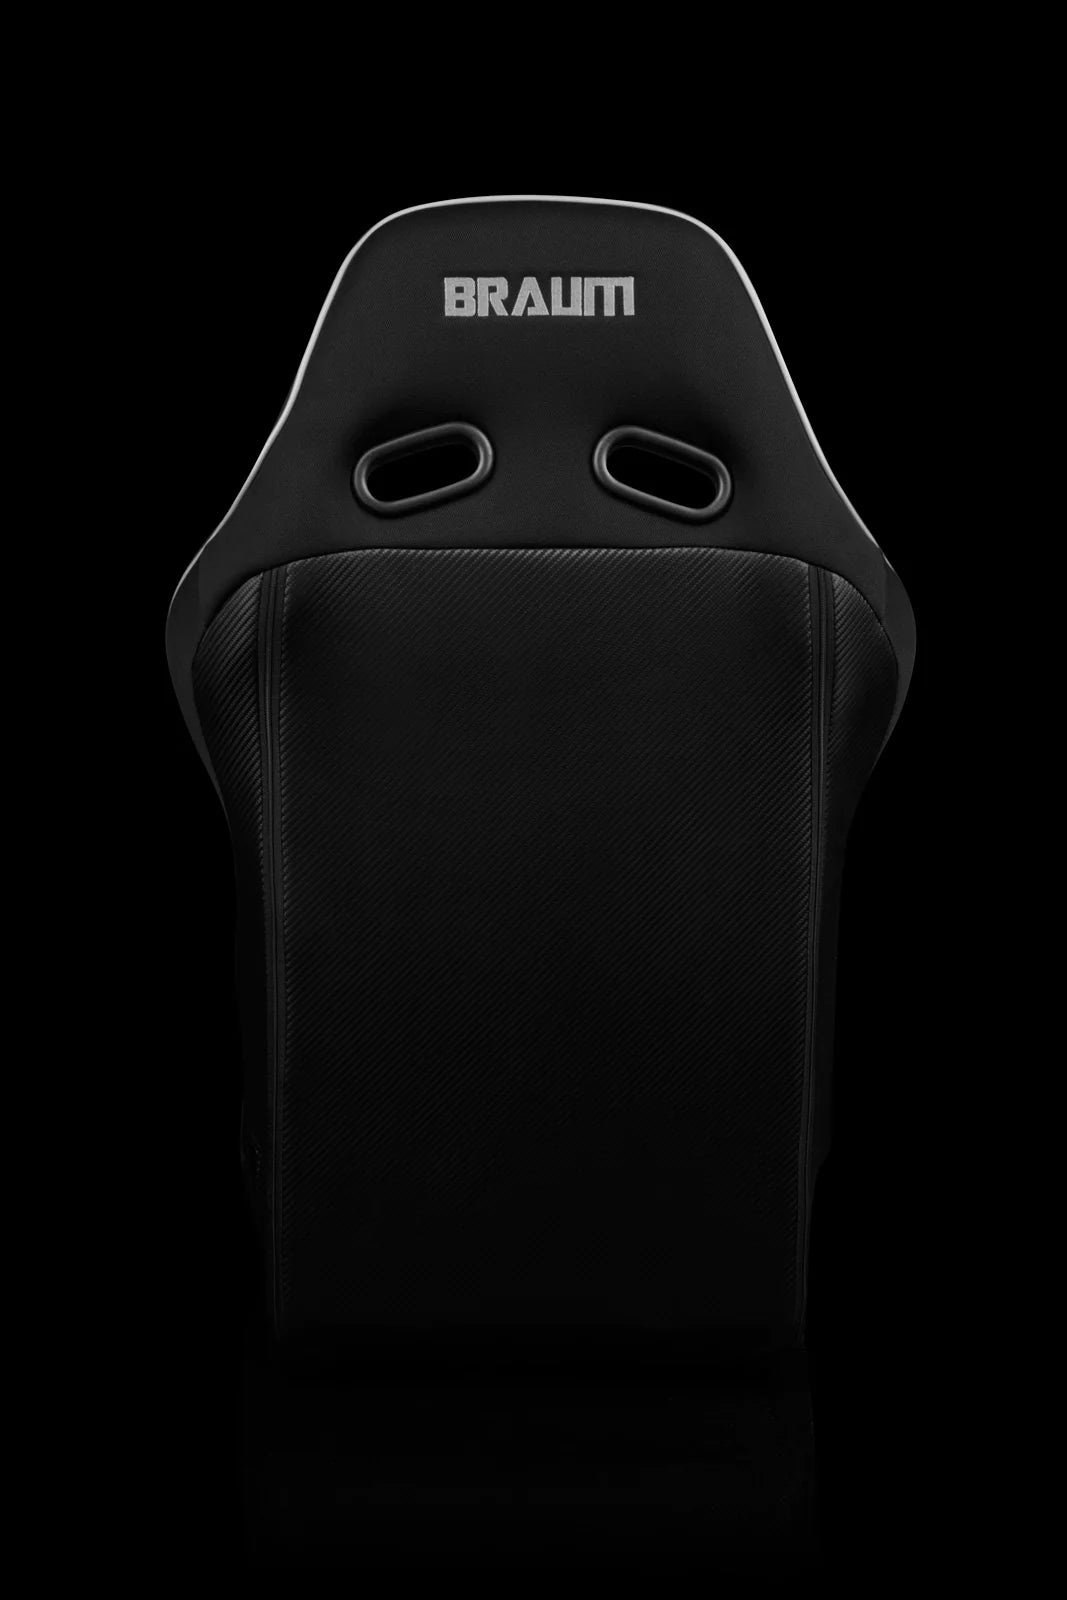 BRAUM FALCON-X Series FIA Certified Fixed Back Racing Seat (Black Cloth | White Trim) – Priced Per Seat